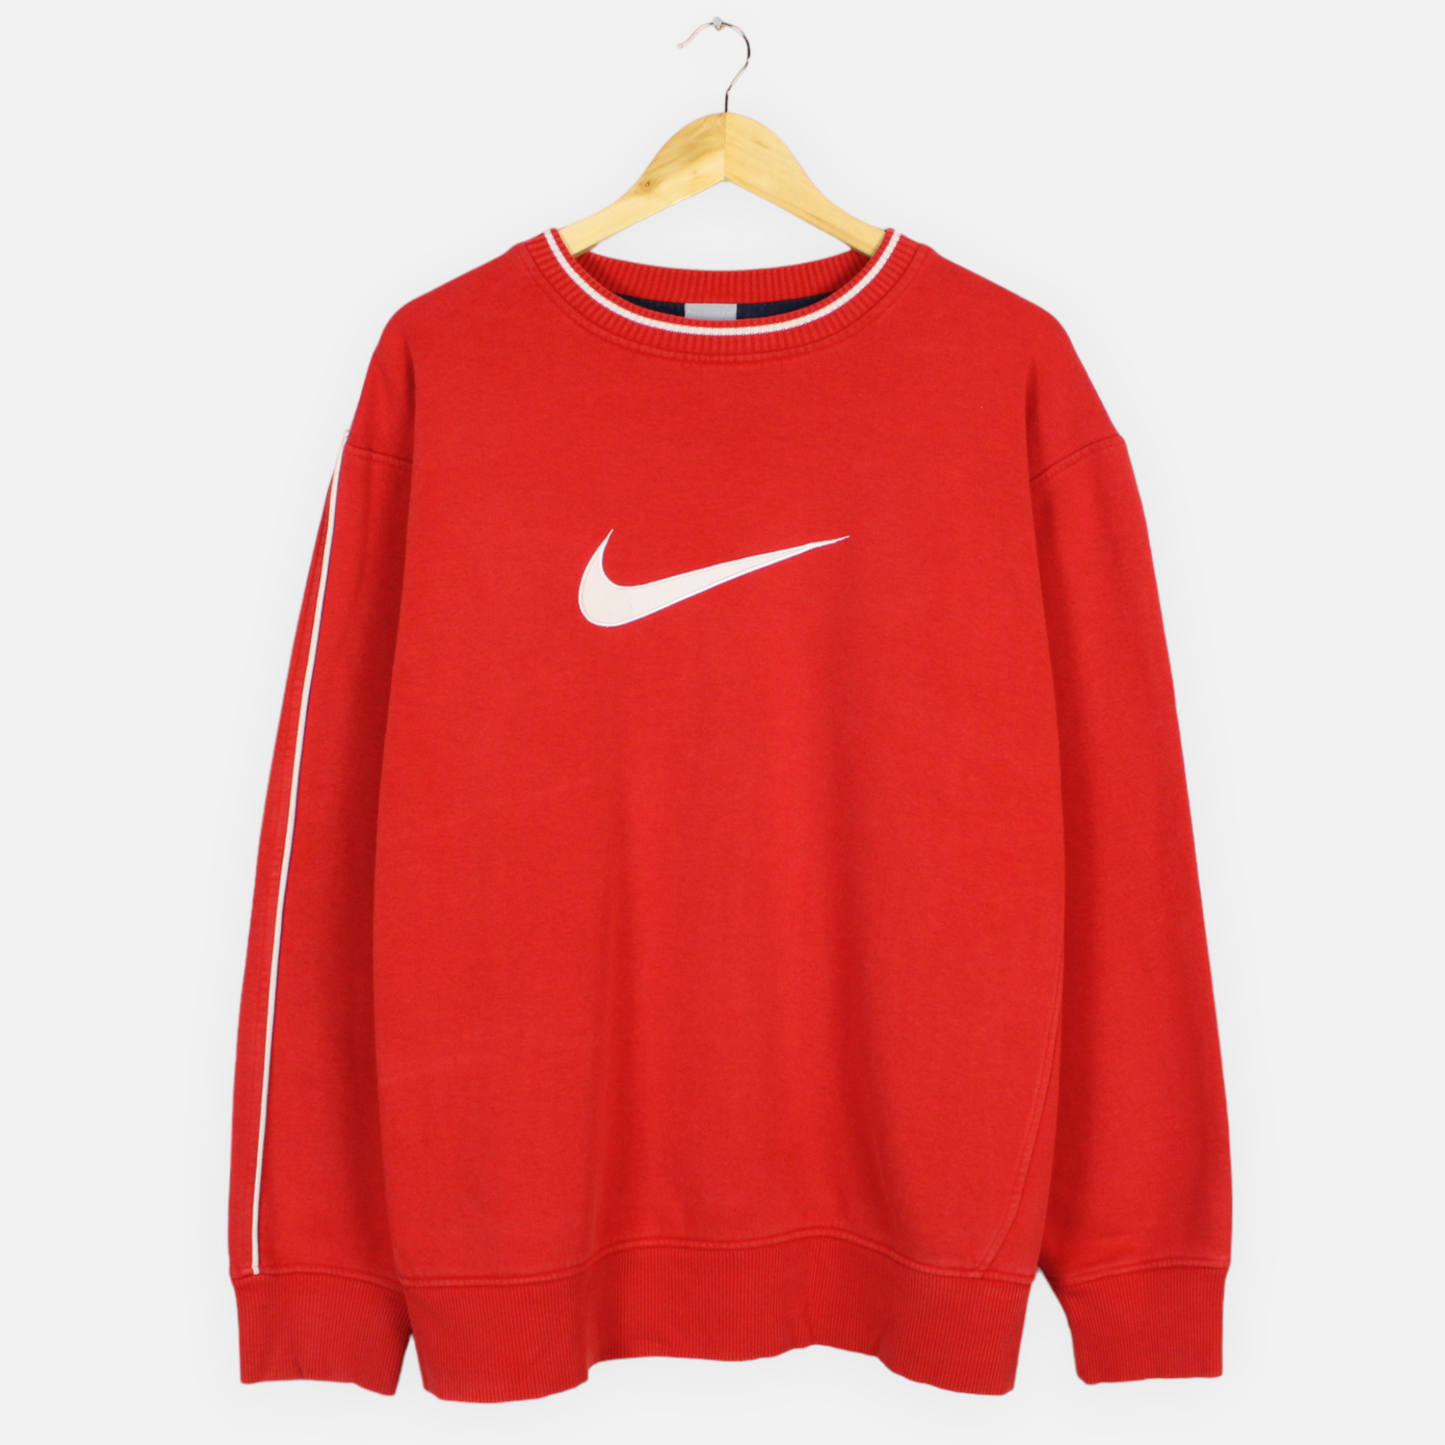 Vintage Nike Big Swoosh Sweatshirt - XL